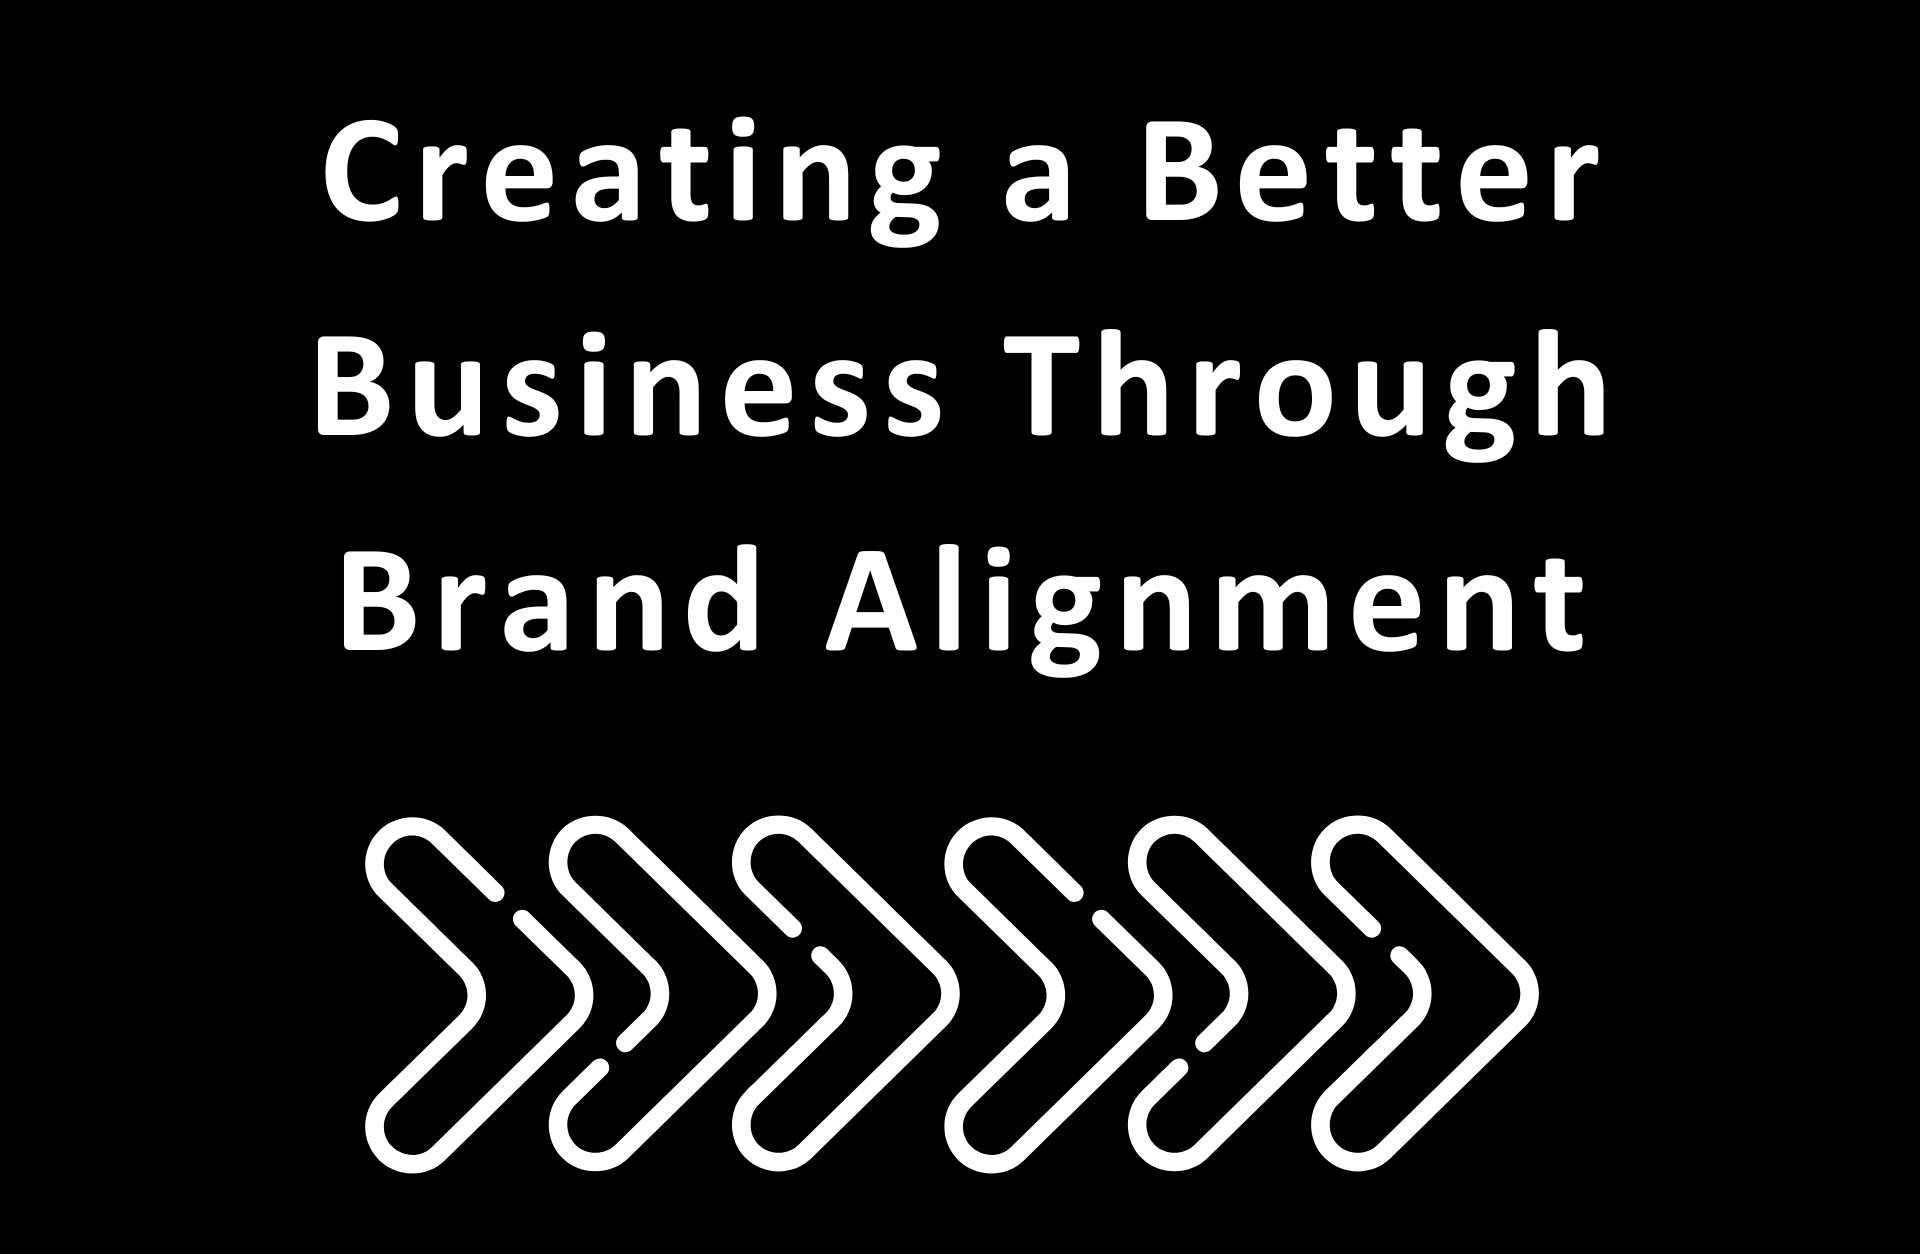 Brand Alignment